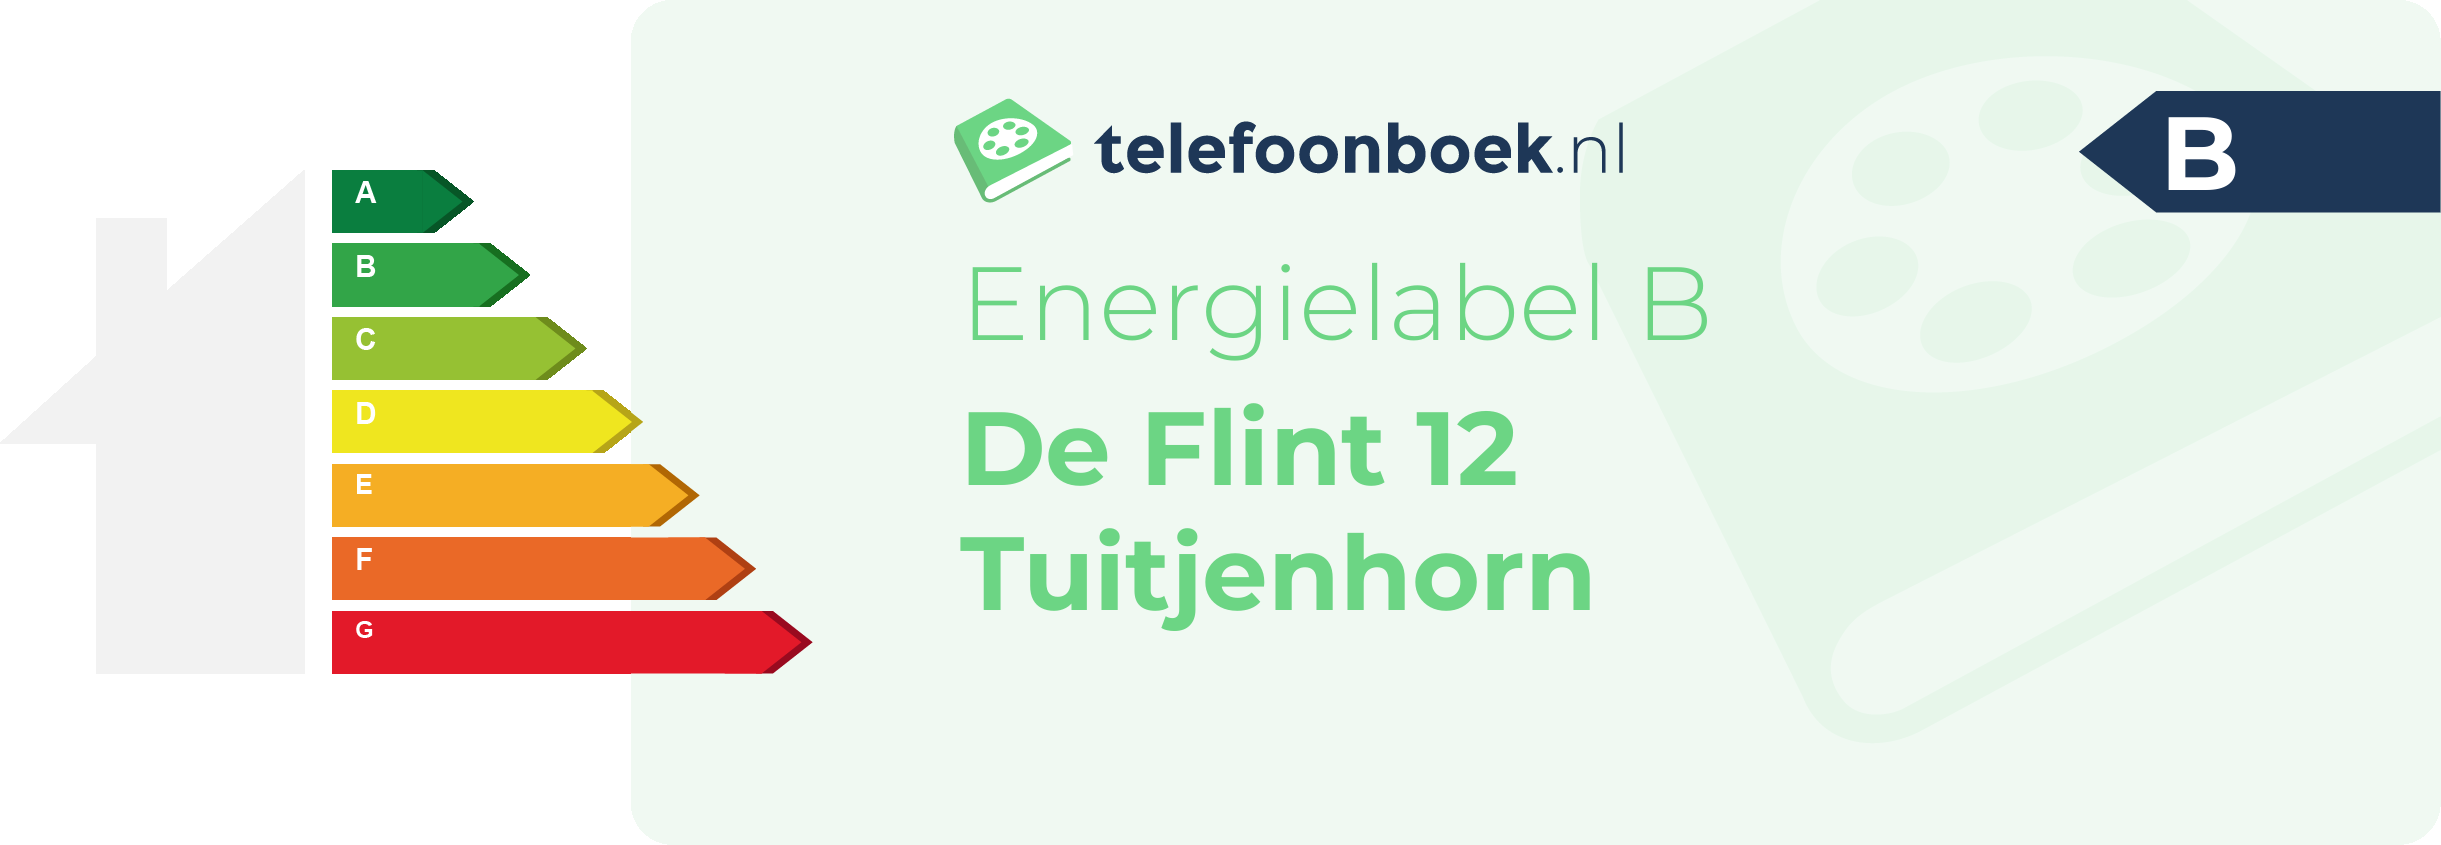 Energielabel De Flint 12 Tuitjenhorn